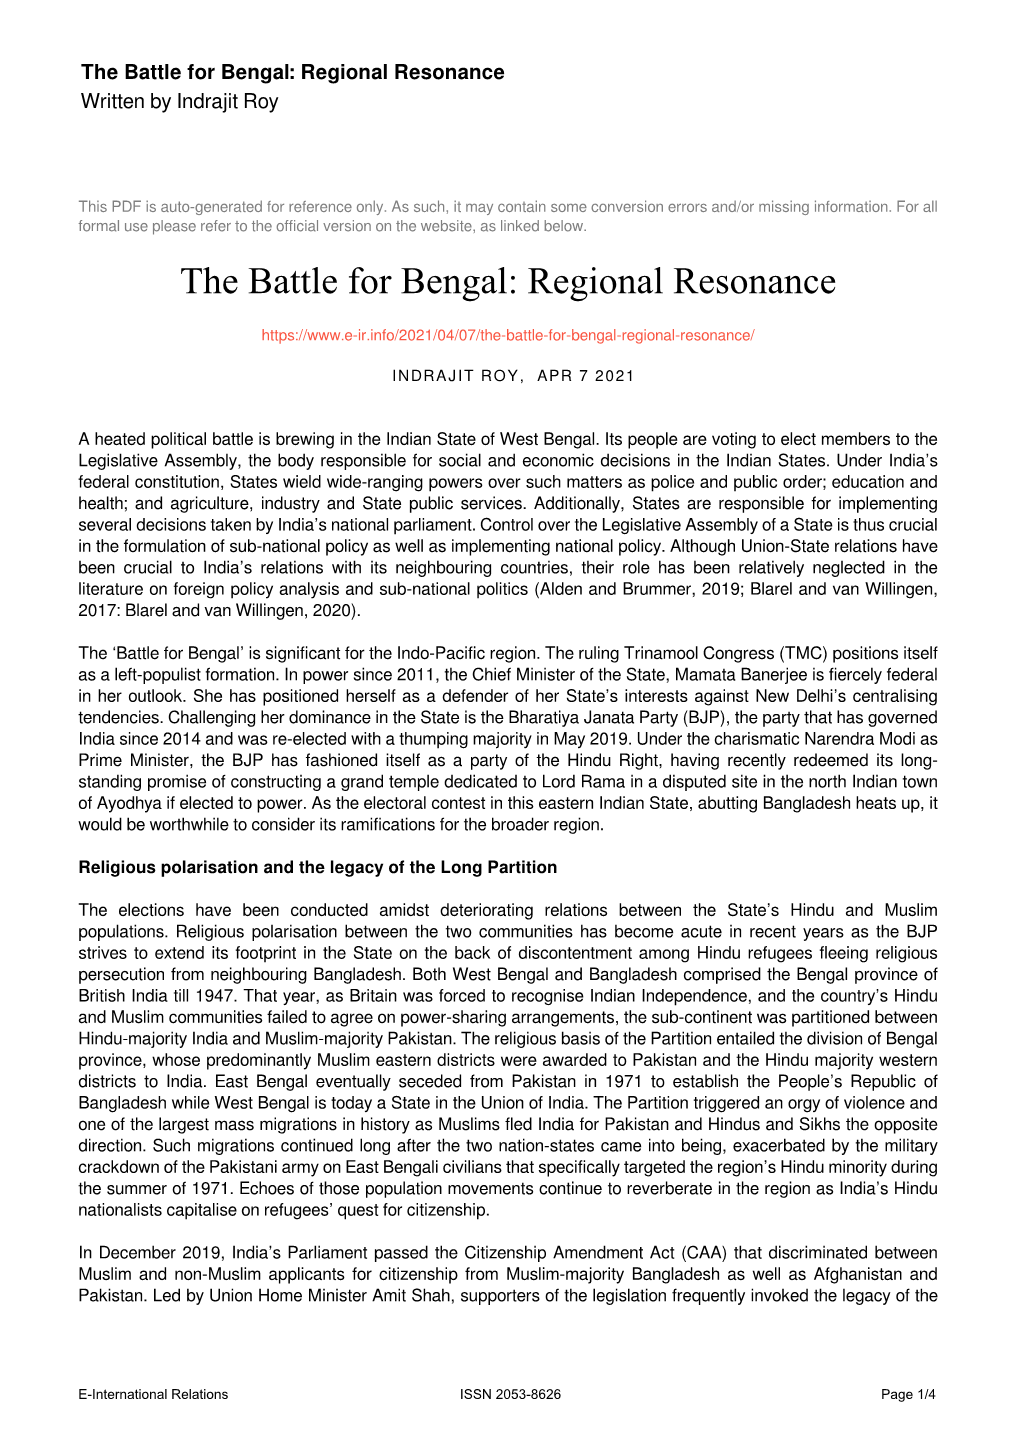 The Battle for Bengal: Regional Resonance Written by Indrajit Roy